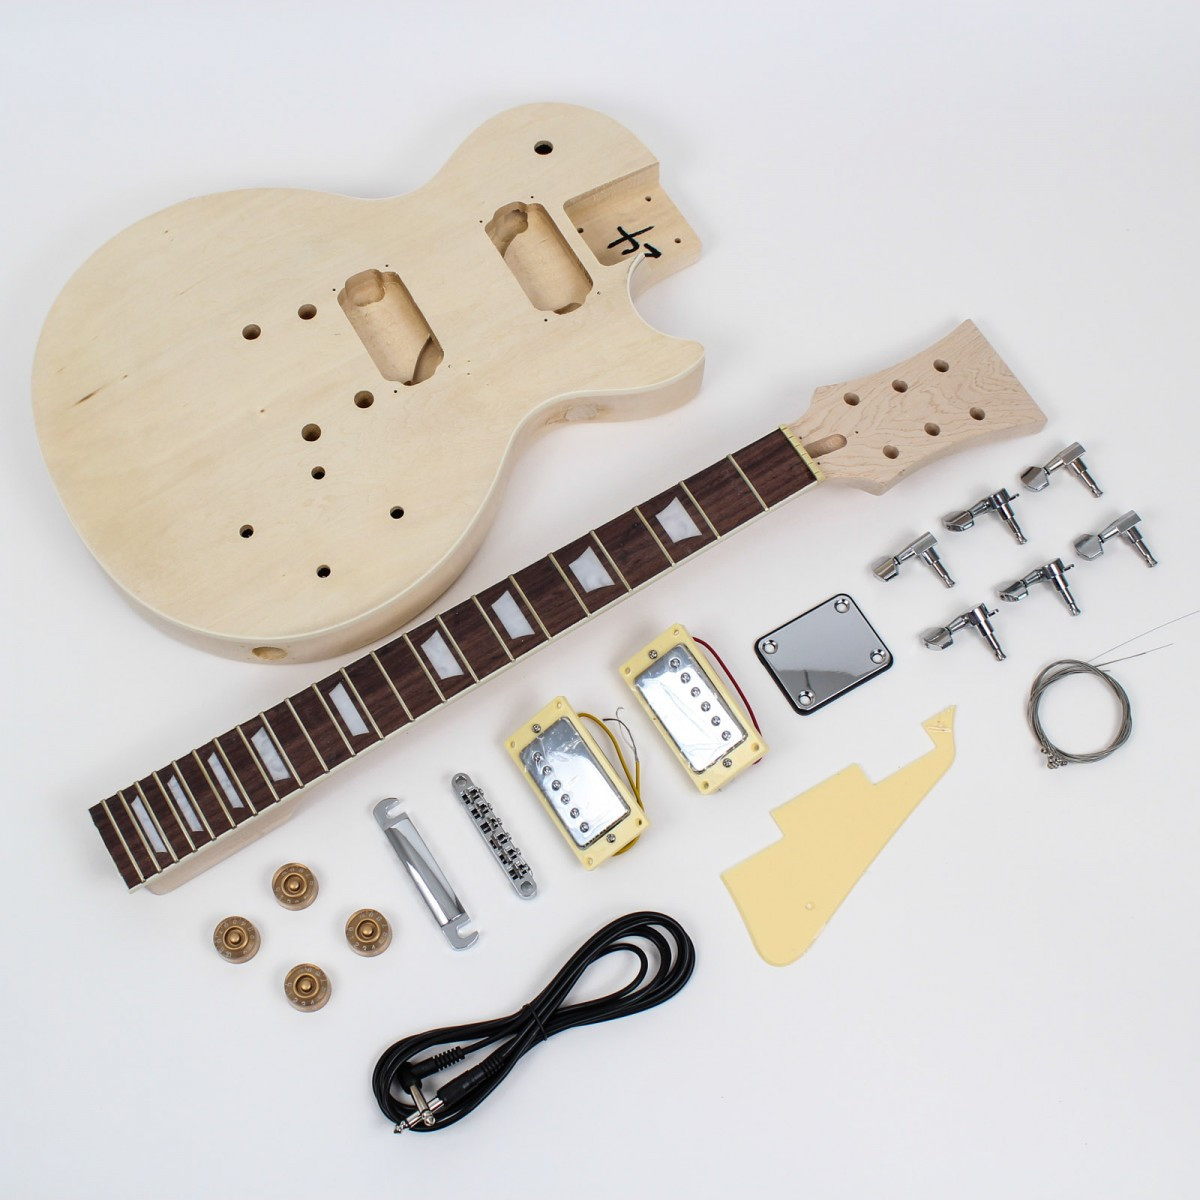 DIY Les Paul Kit
 Les Paul Style Guitar Kit DIY Guitars